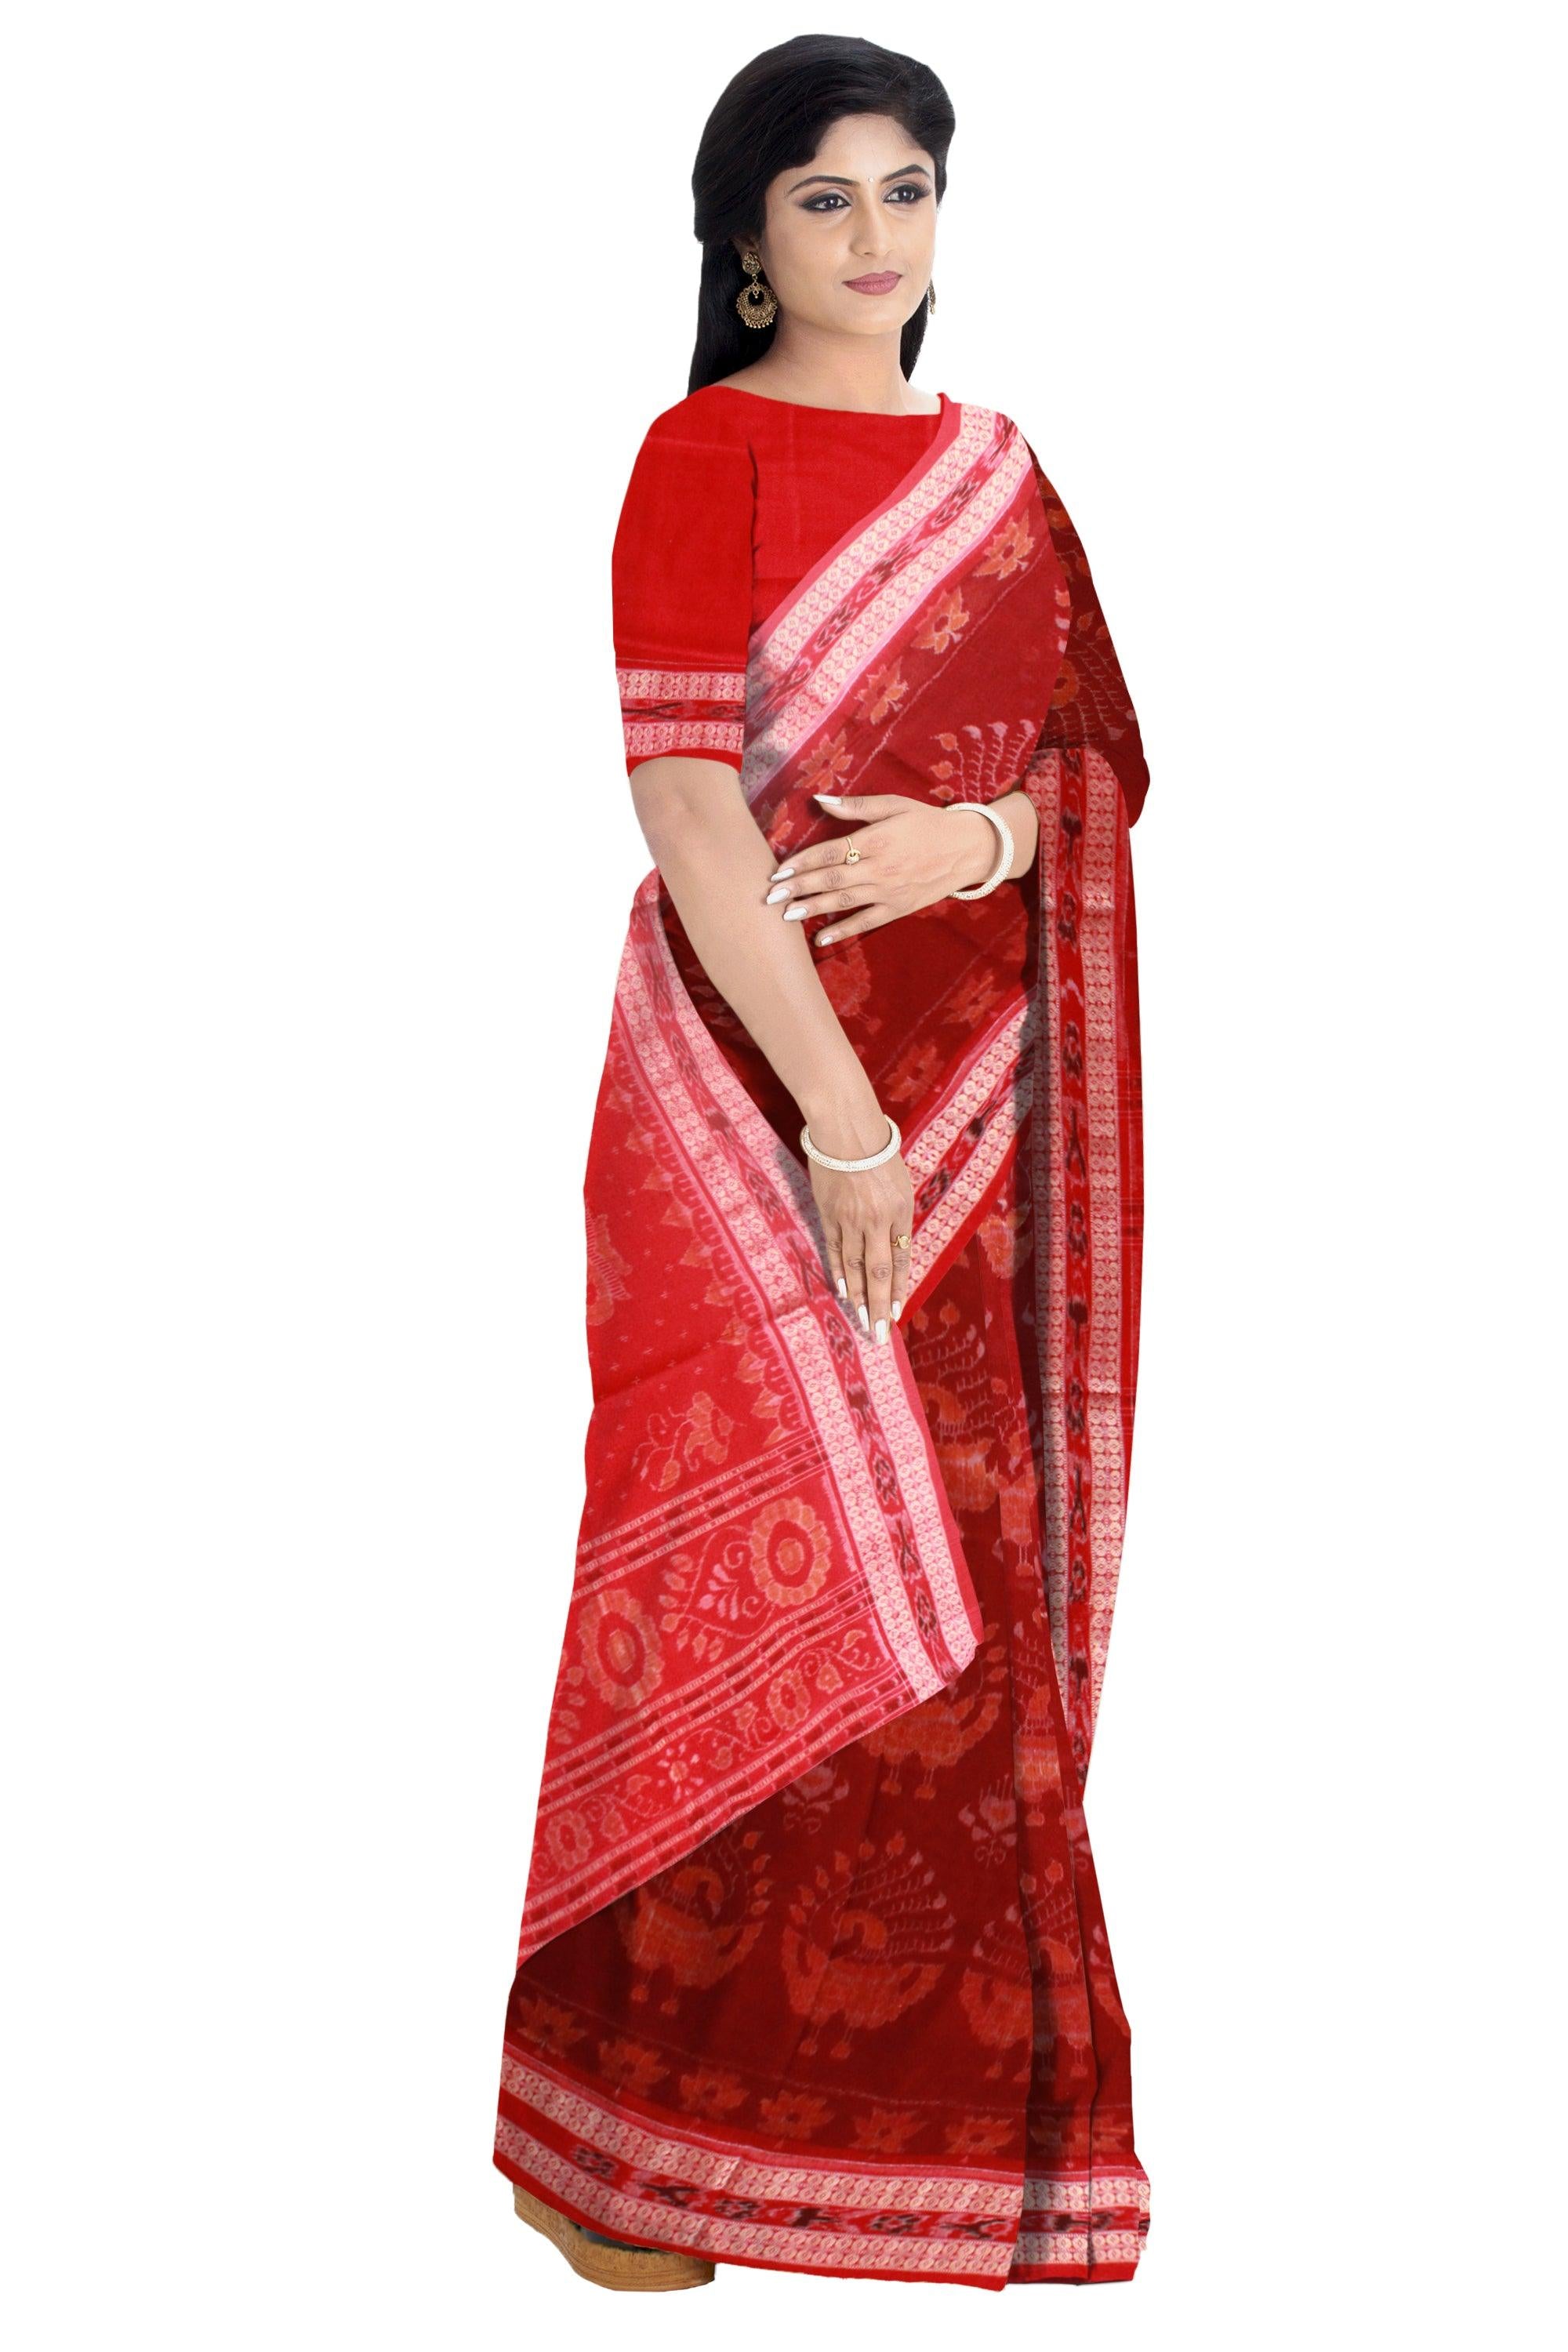 Maroon color Sambalpuri Cotton saree in Mayuri design with blouse piece. - Koshali Arts & Crafts Enterprise